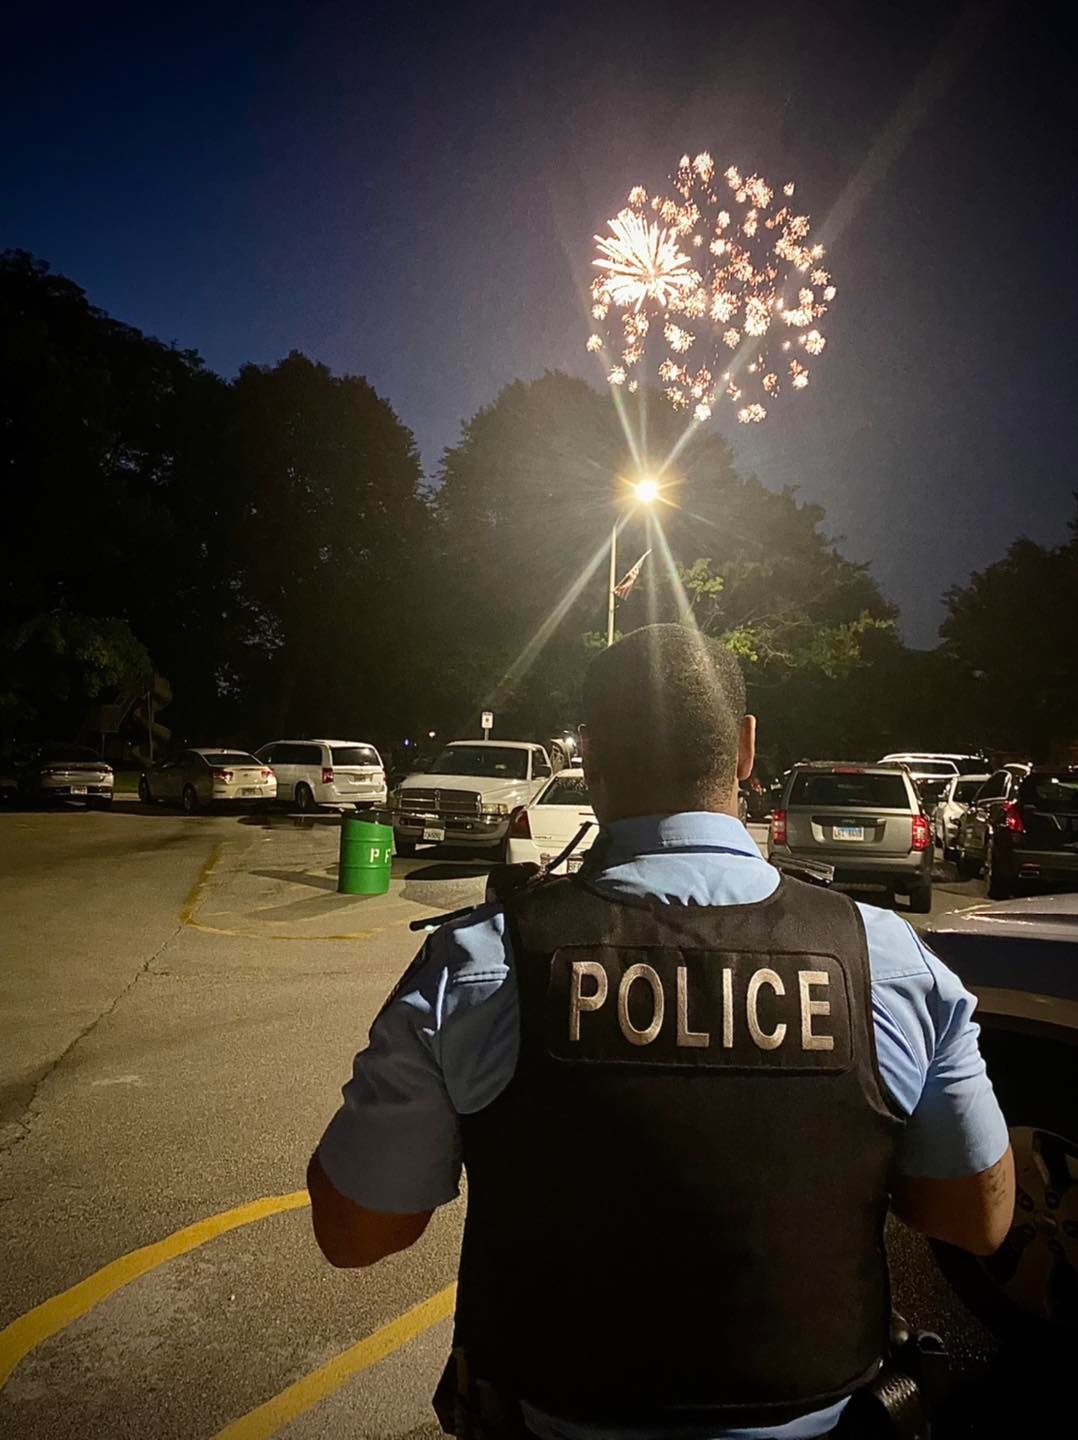 An officer enjoys fireworks on July 4 in Park Forest